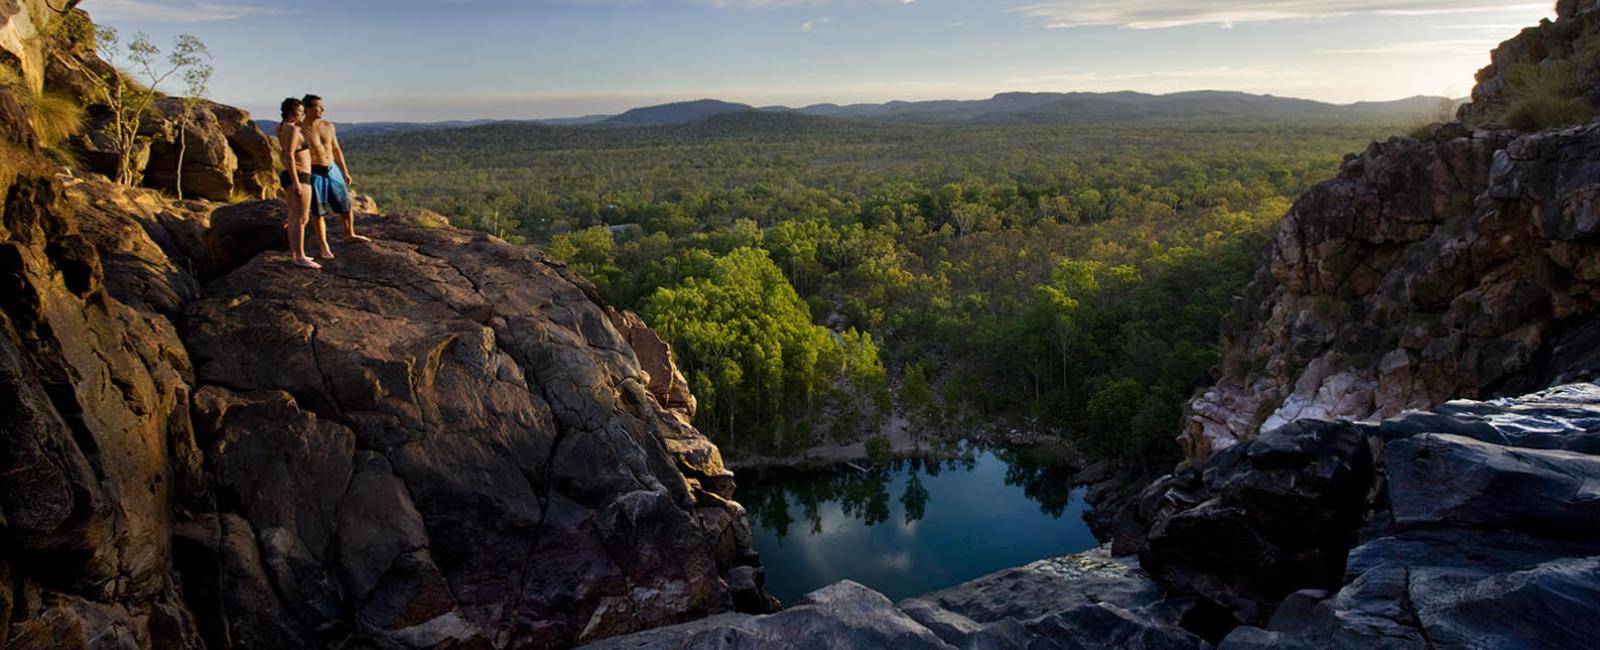 Gunlom views | Five best natural encounters near Darwin